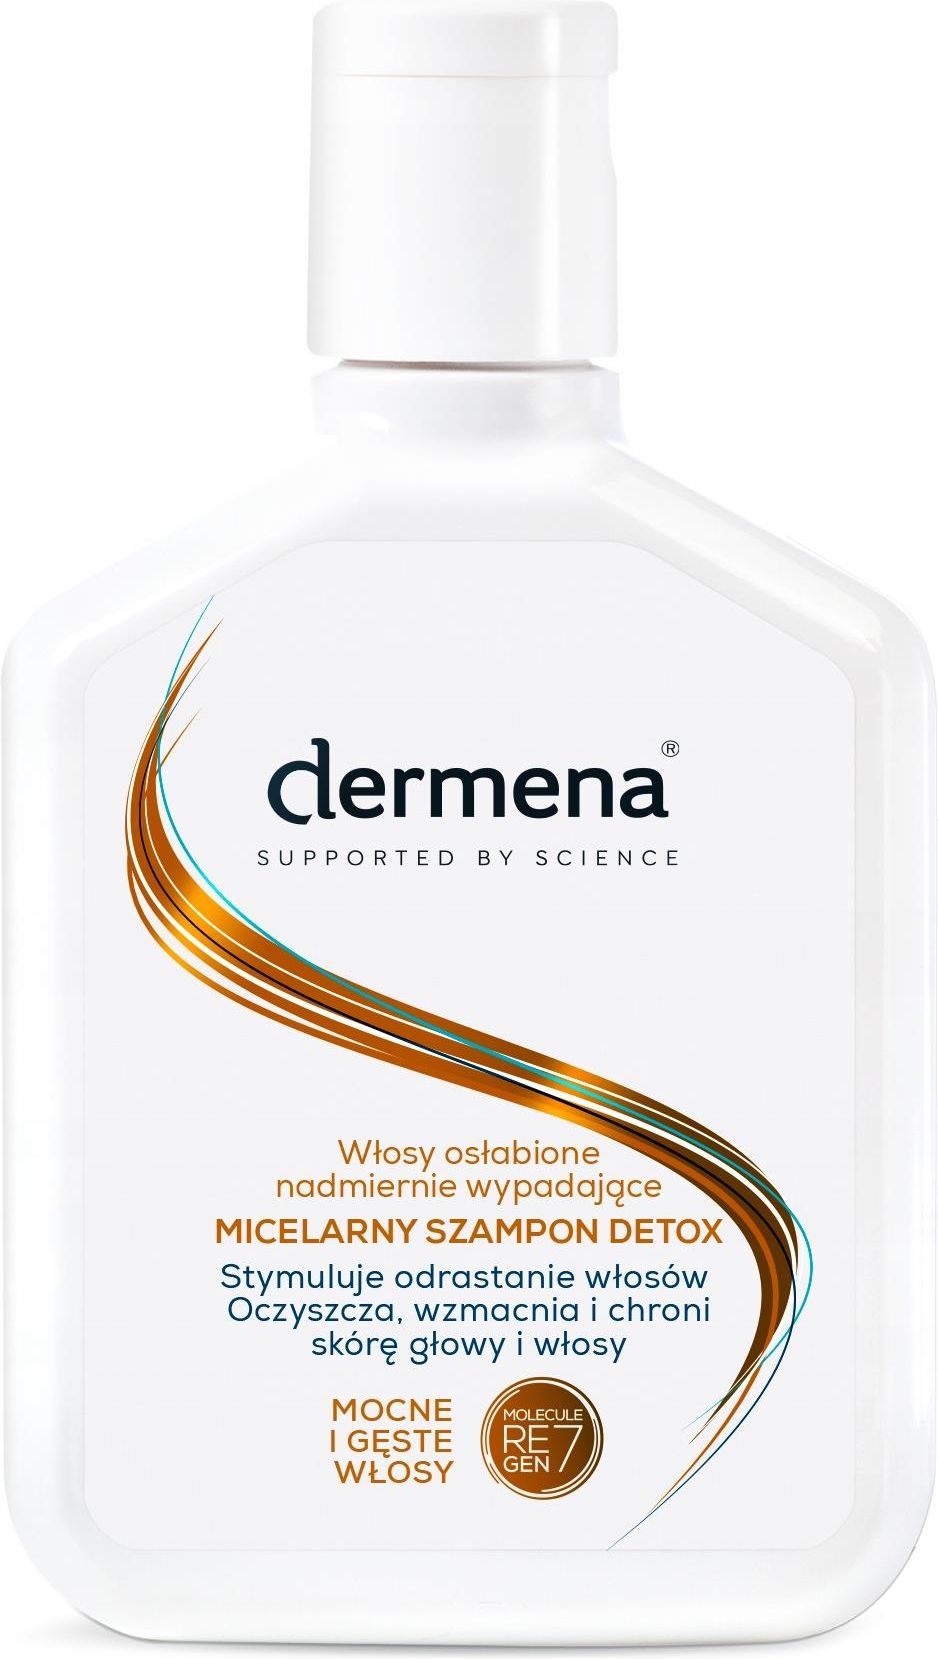 dermena repair szampon 200 ml ceneo